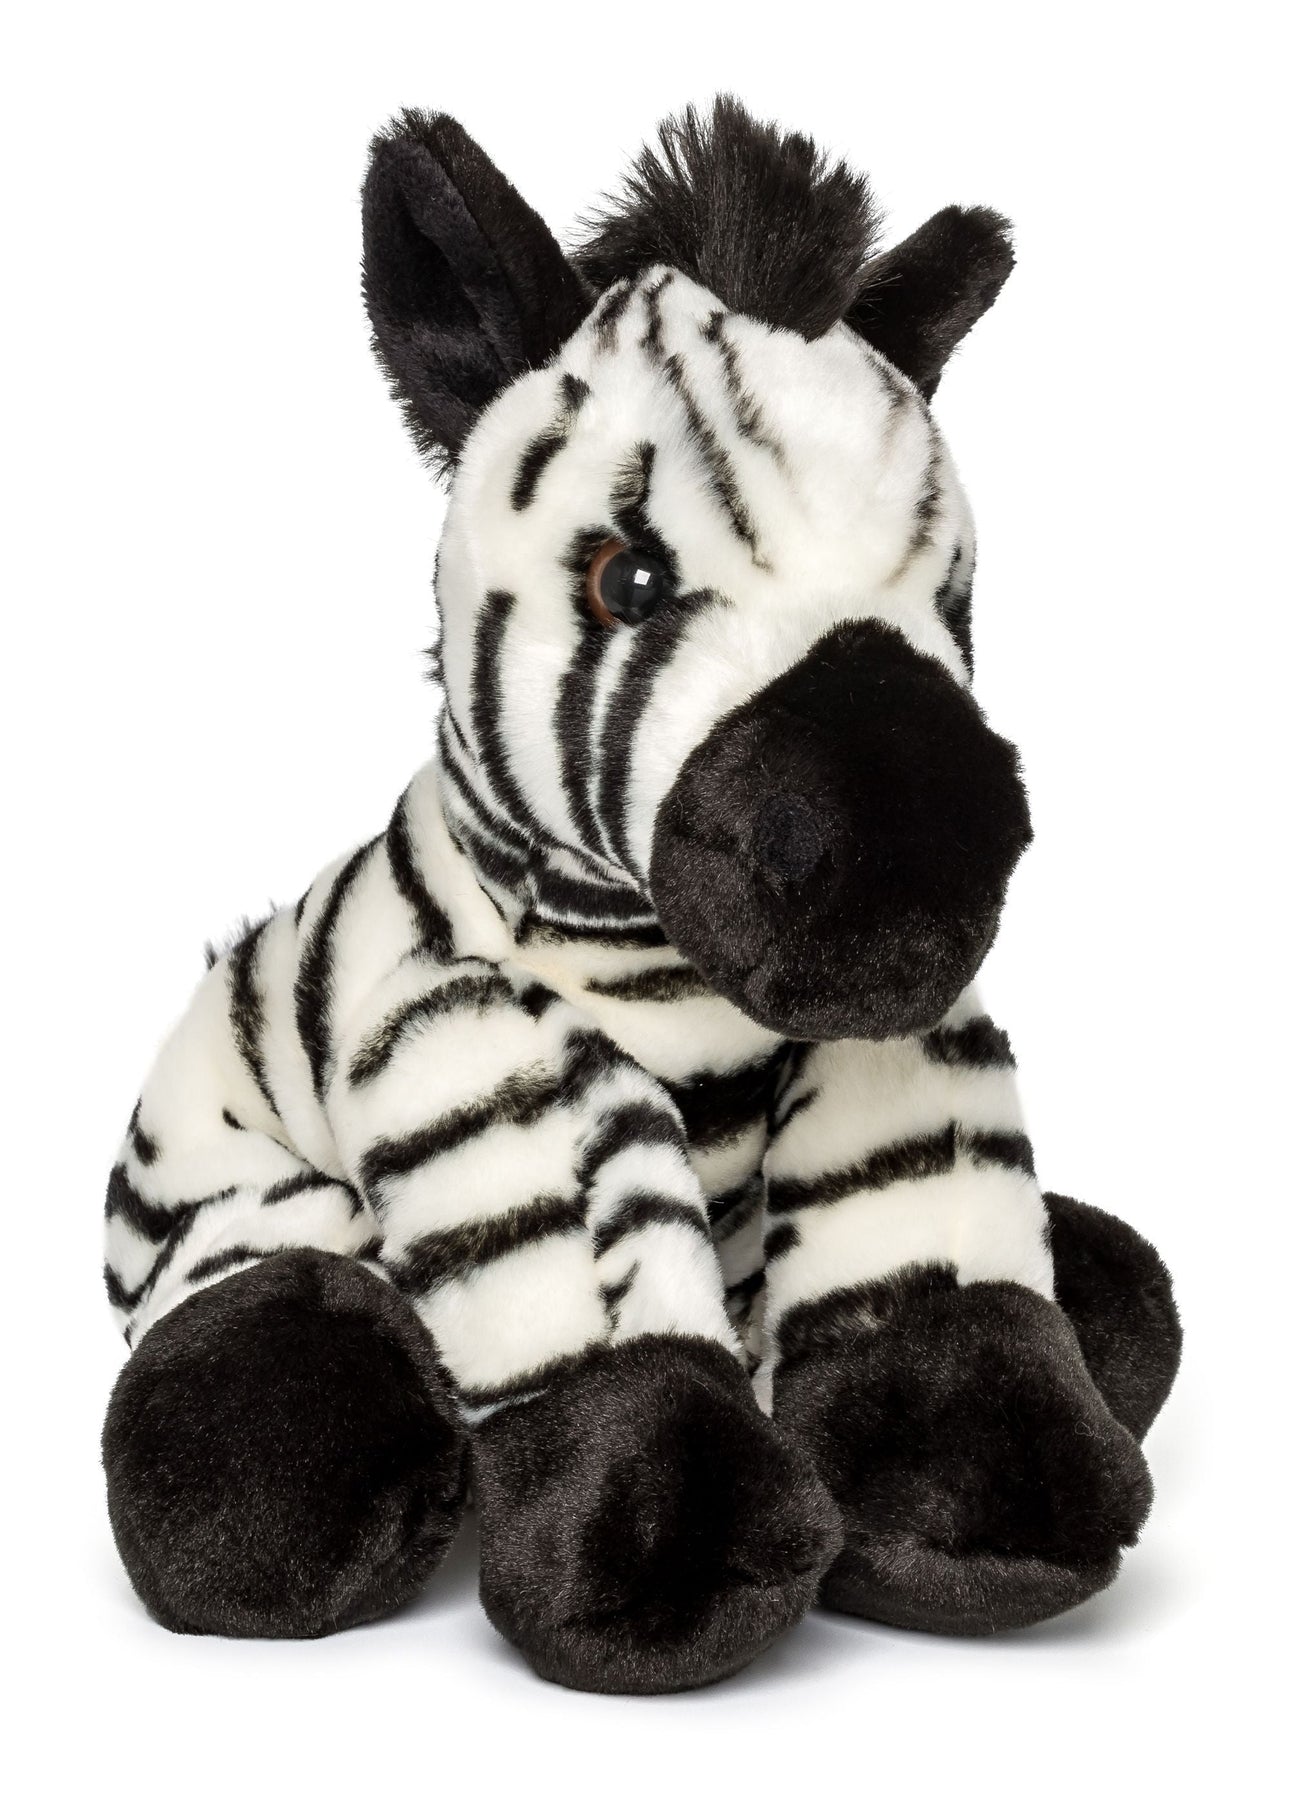 Stuffed Animal - Zebra